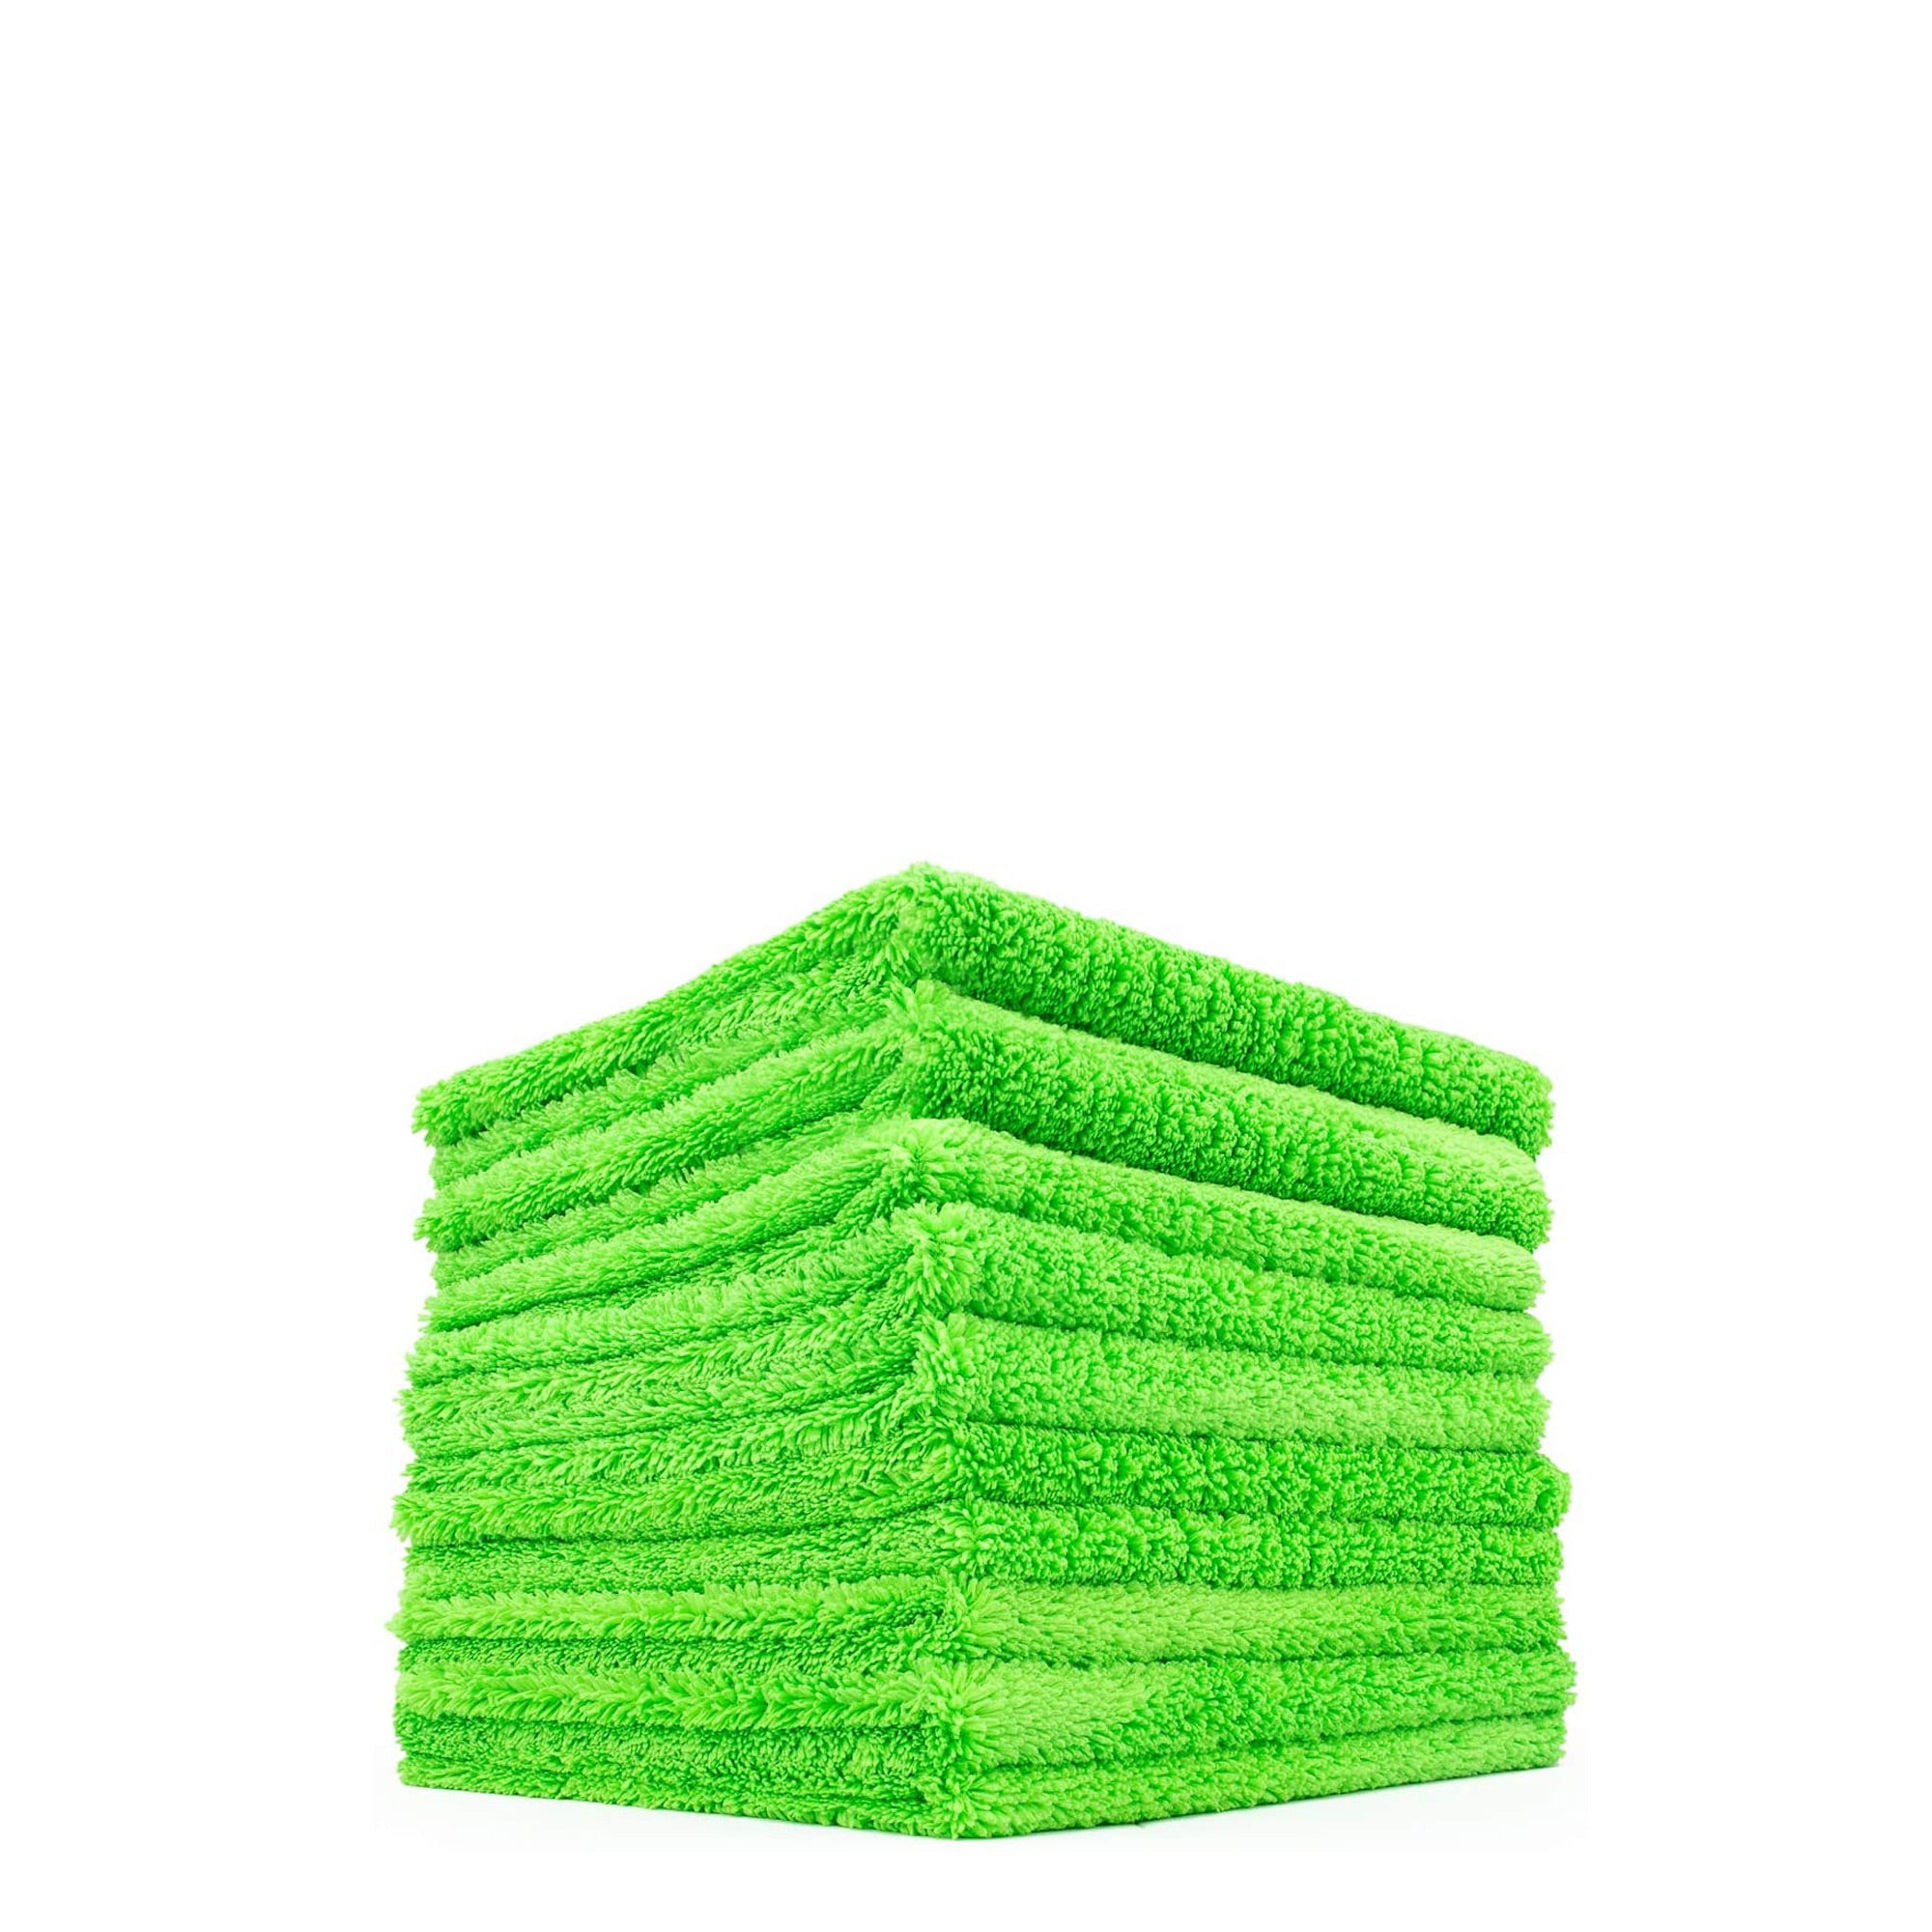 Ultimate Microfiber Utility Towels 50-Pack